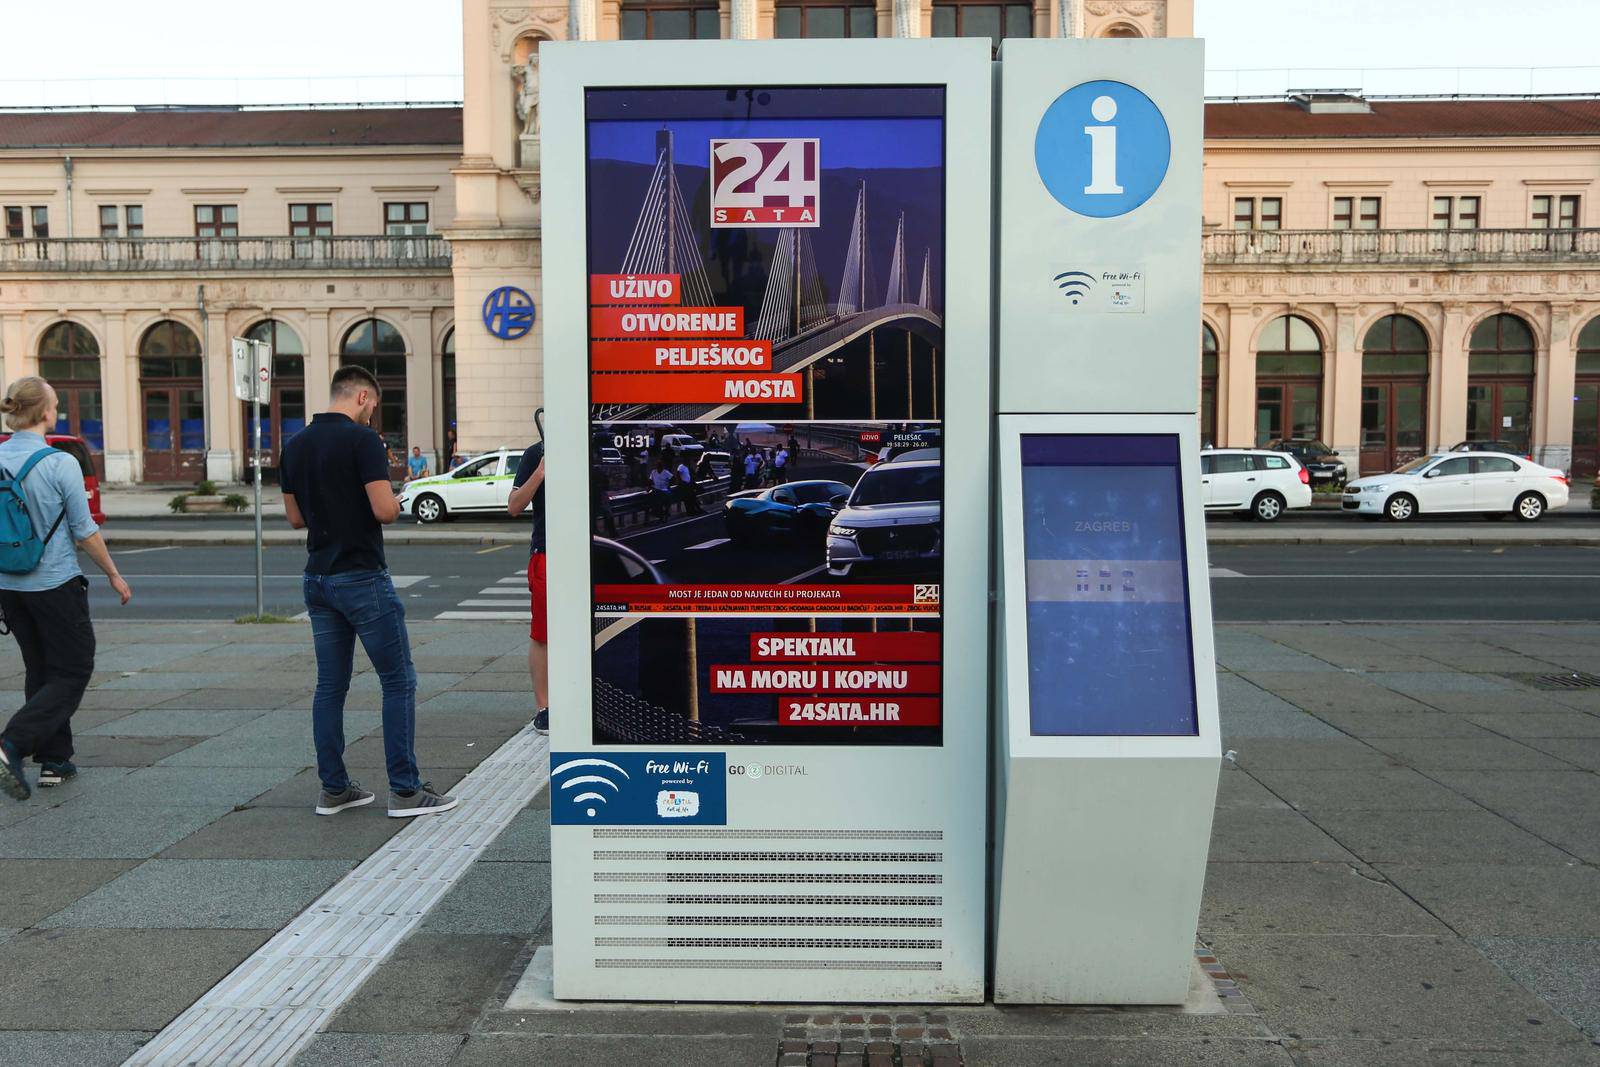 Zagreb: Go2 Digital ekrani